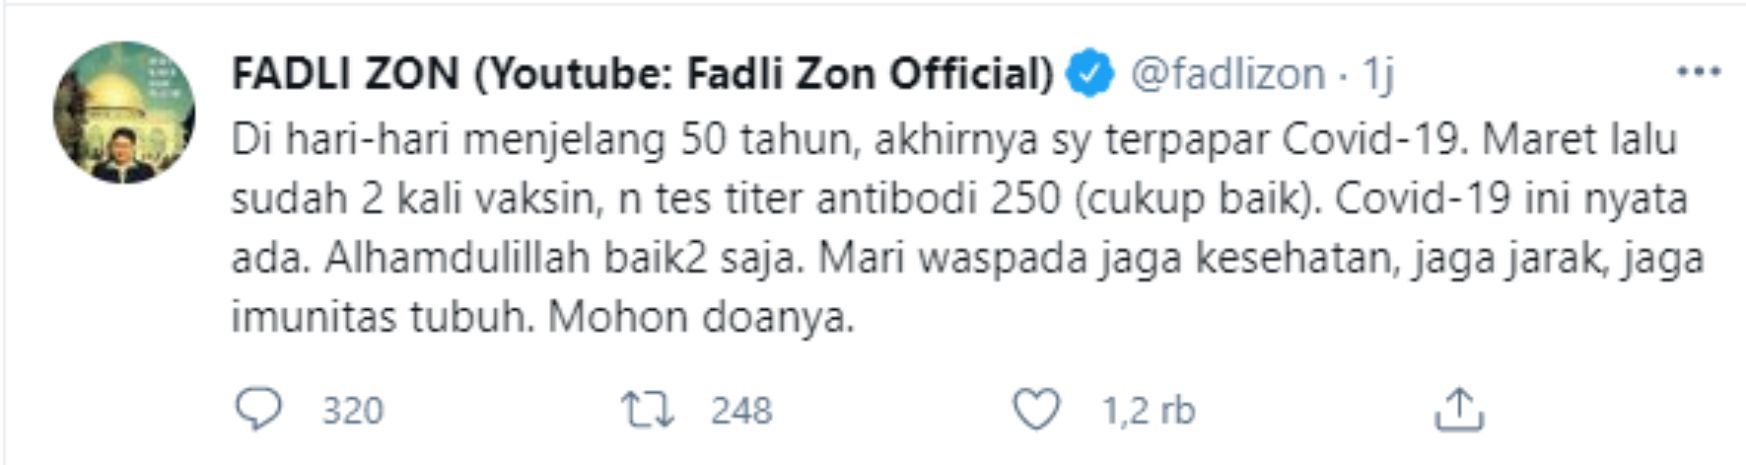 Fadli Zon mengabarkan dirinya telah terpapar covid-19 meski sempat disuntik vaksin dua kali. Ia mengakui bahwa covid-19 nyata.